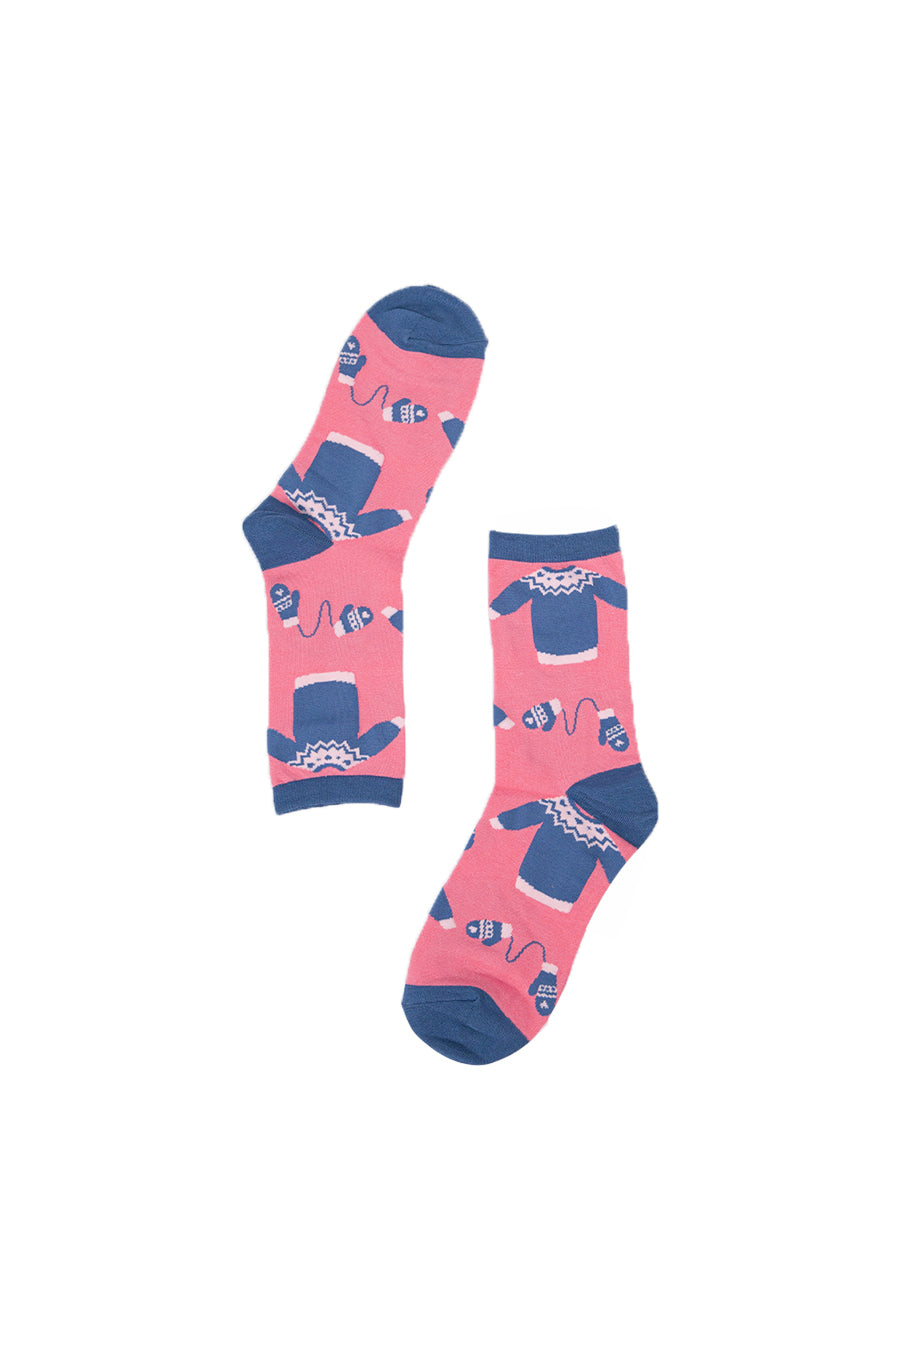 Womens Bamboo Christmas Socks Xmas Jumper Novelty Sock Pink